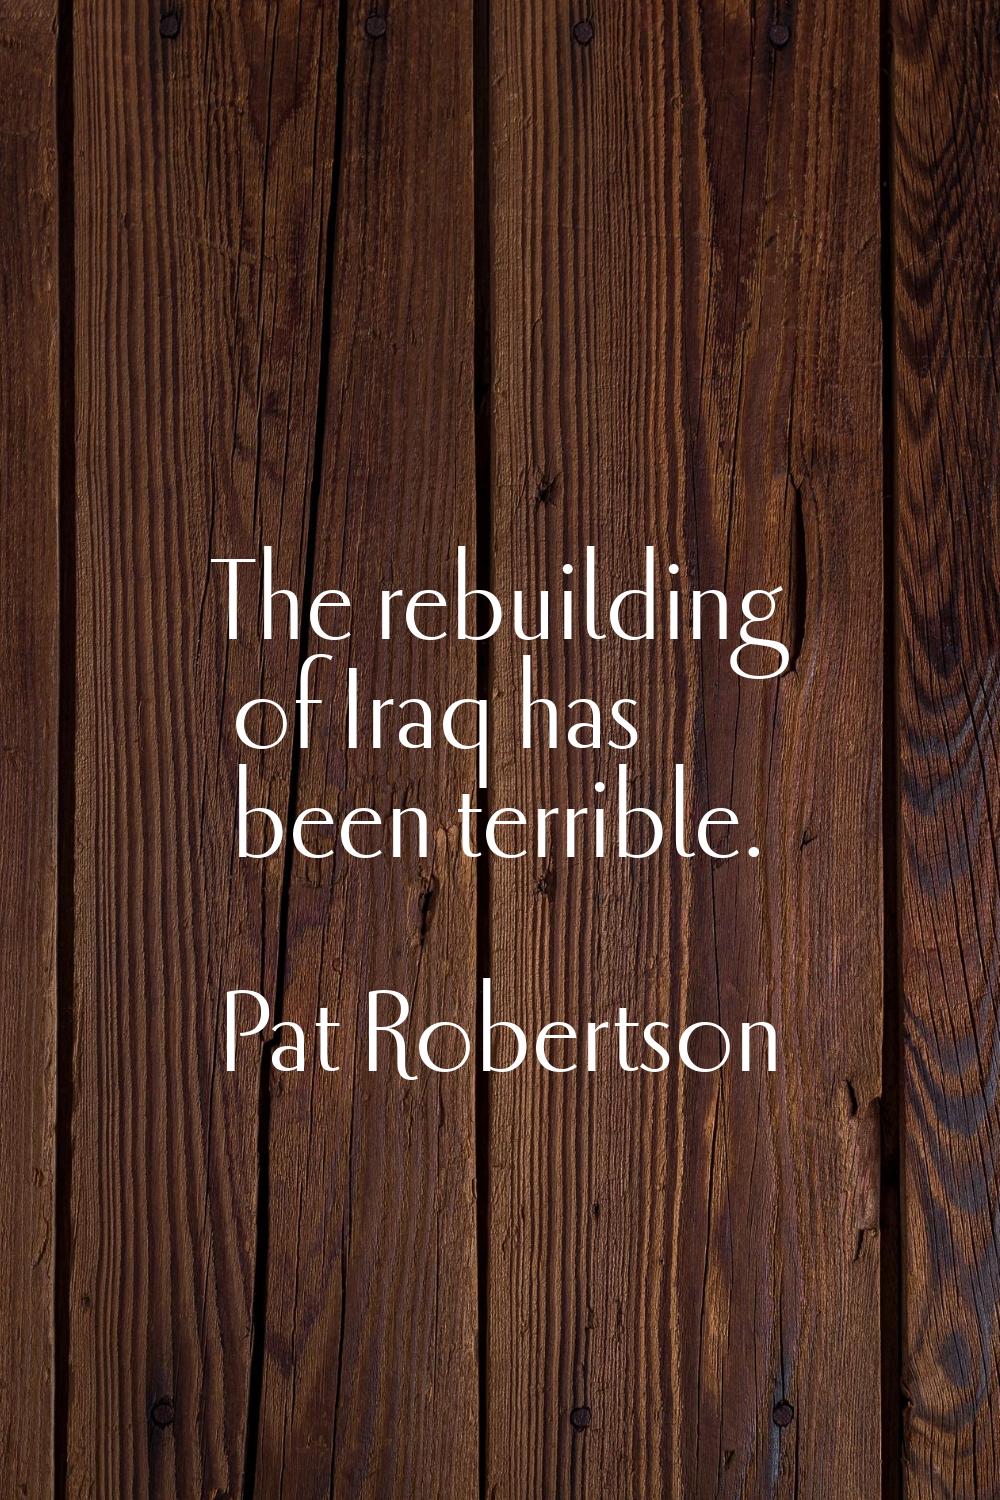 The rebuilding of Iraq has been terrible.